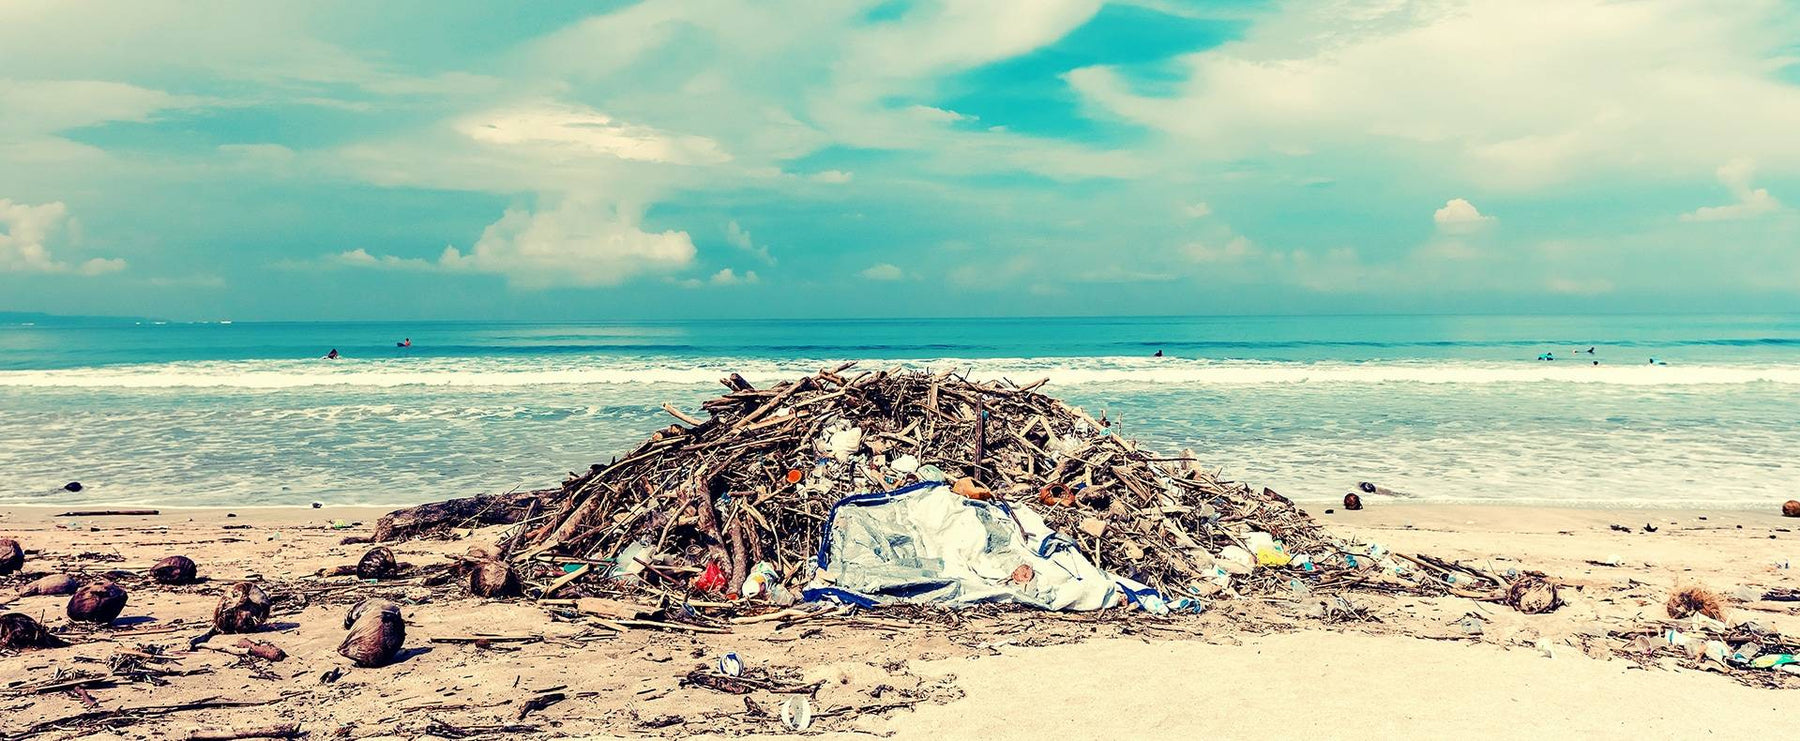 The Plastic Pollution Crisis